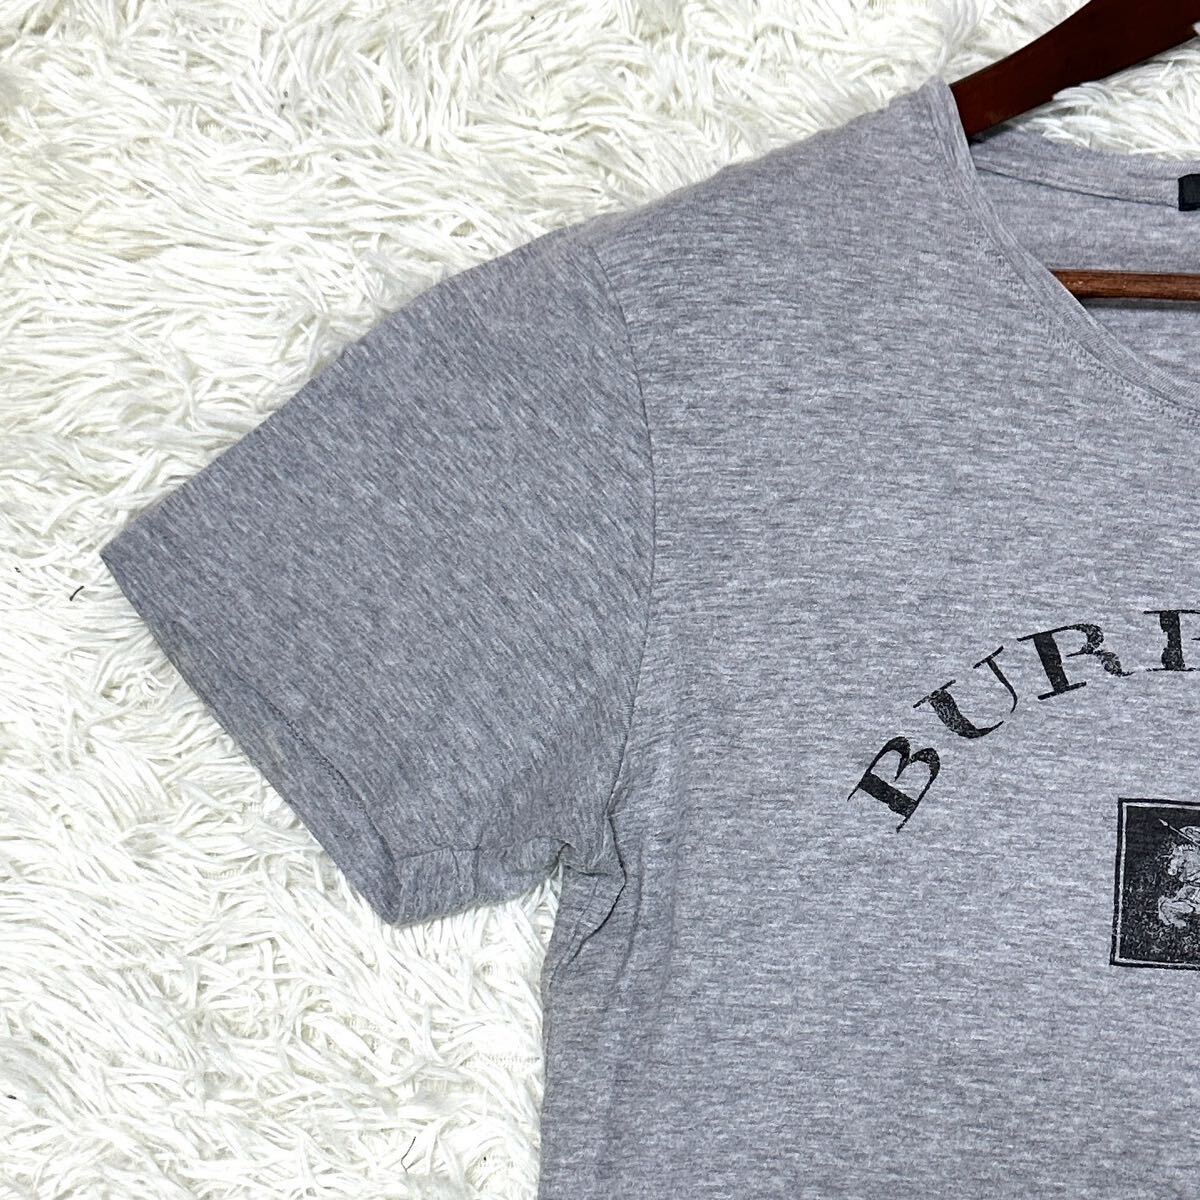 BURBERRY LONDON バーバリーロンドン Tシャツ 半袖 ブランドロゴ グレー 灰色 サイズ3_画像3